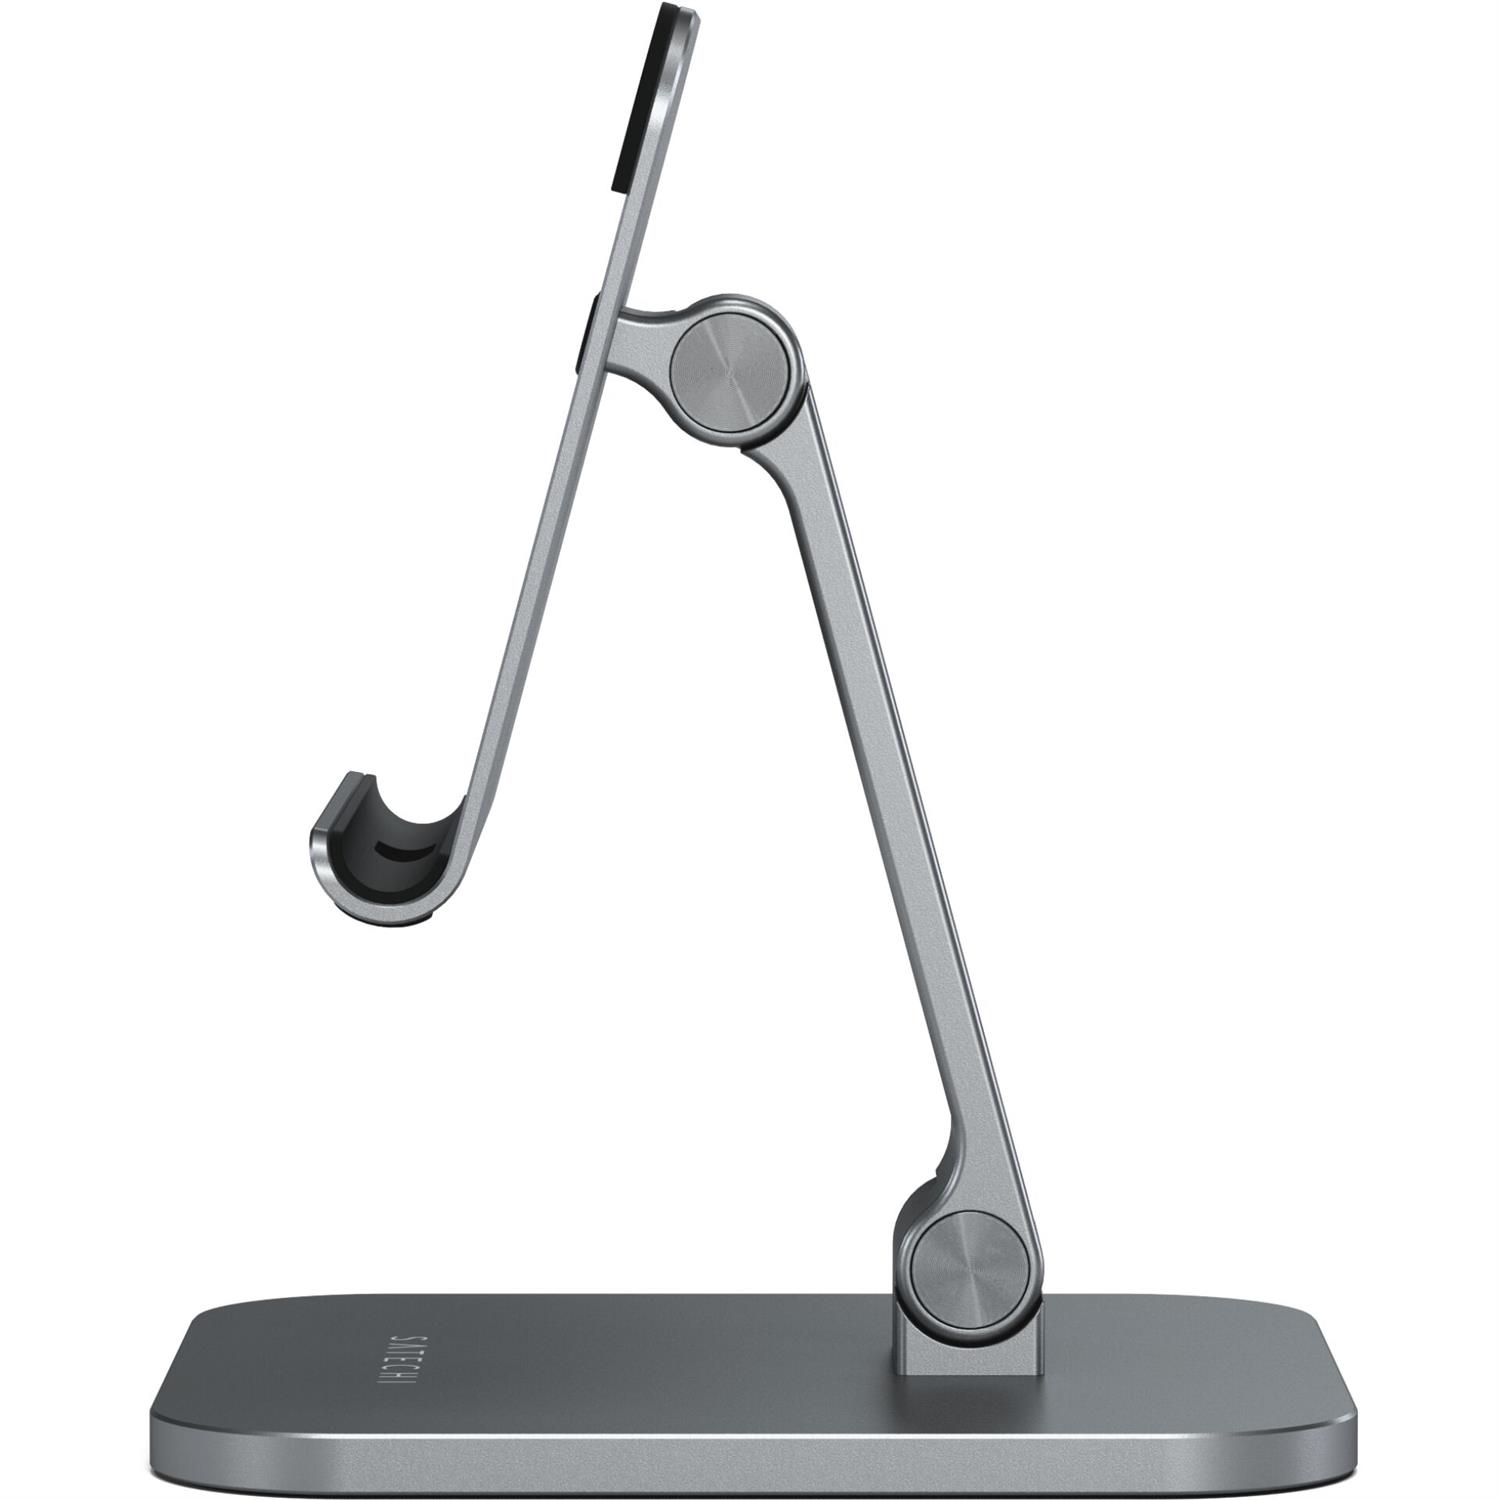 Satechi Aluminum Desktop Stand für Apple iPad Pro - Space Gray (Grau)